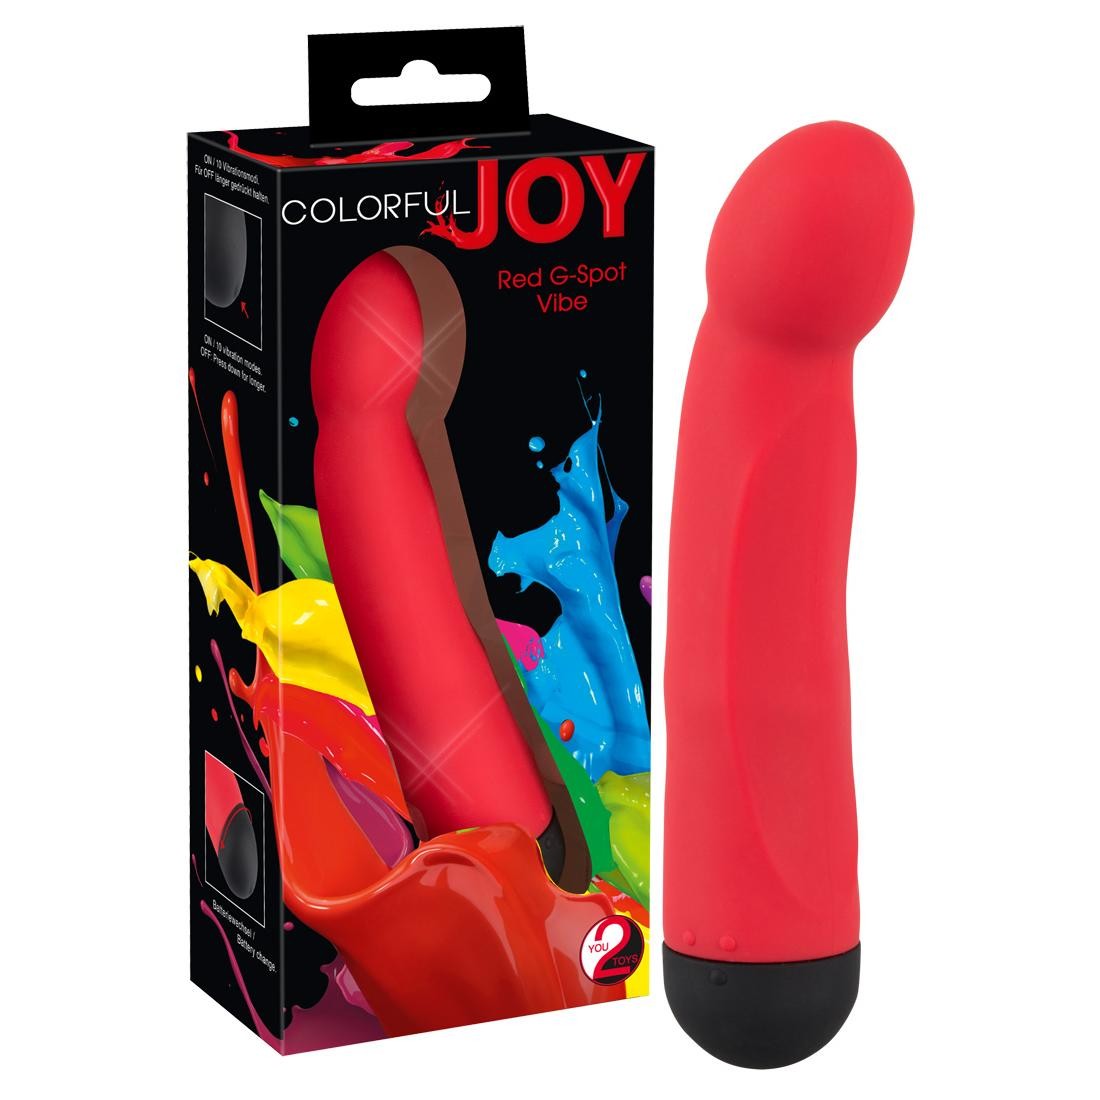  You2Toys  -  Colorful  Joy  Red  G-Spot  Vibe  -  Vibrator 